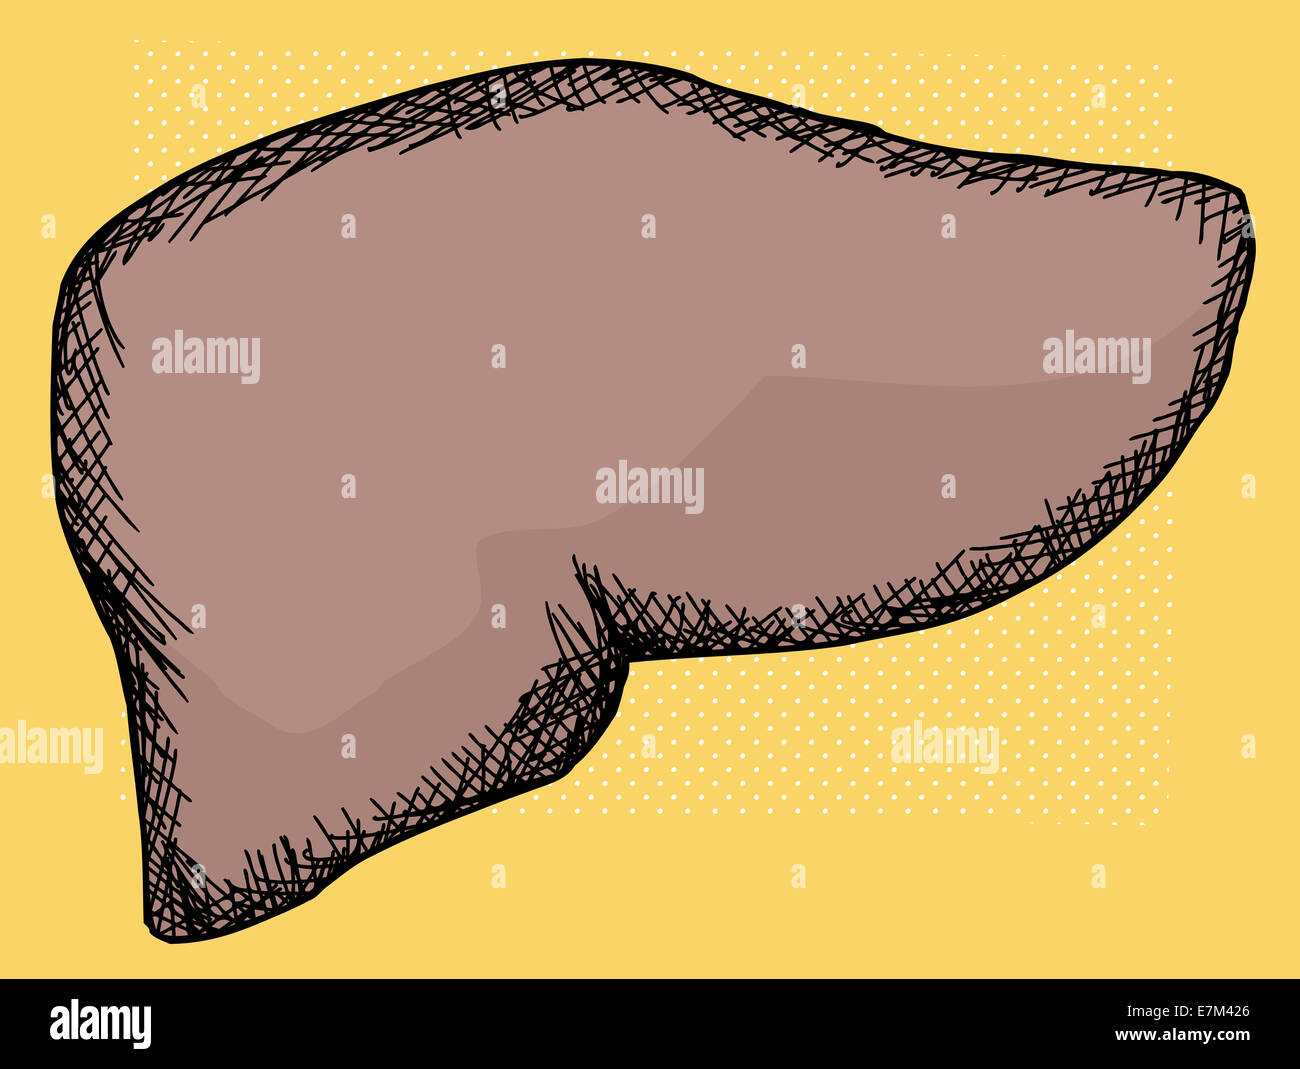 Human liver cartoon over yellow halftone background Stock Photo